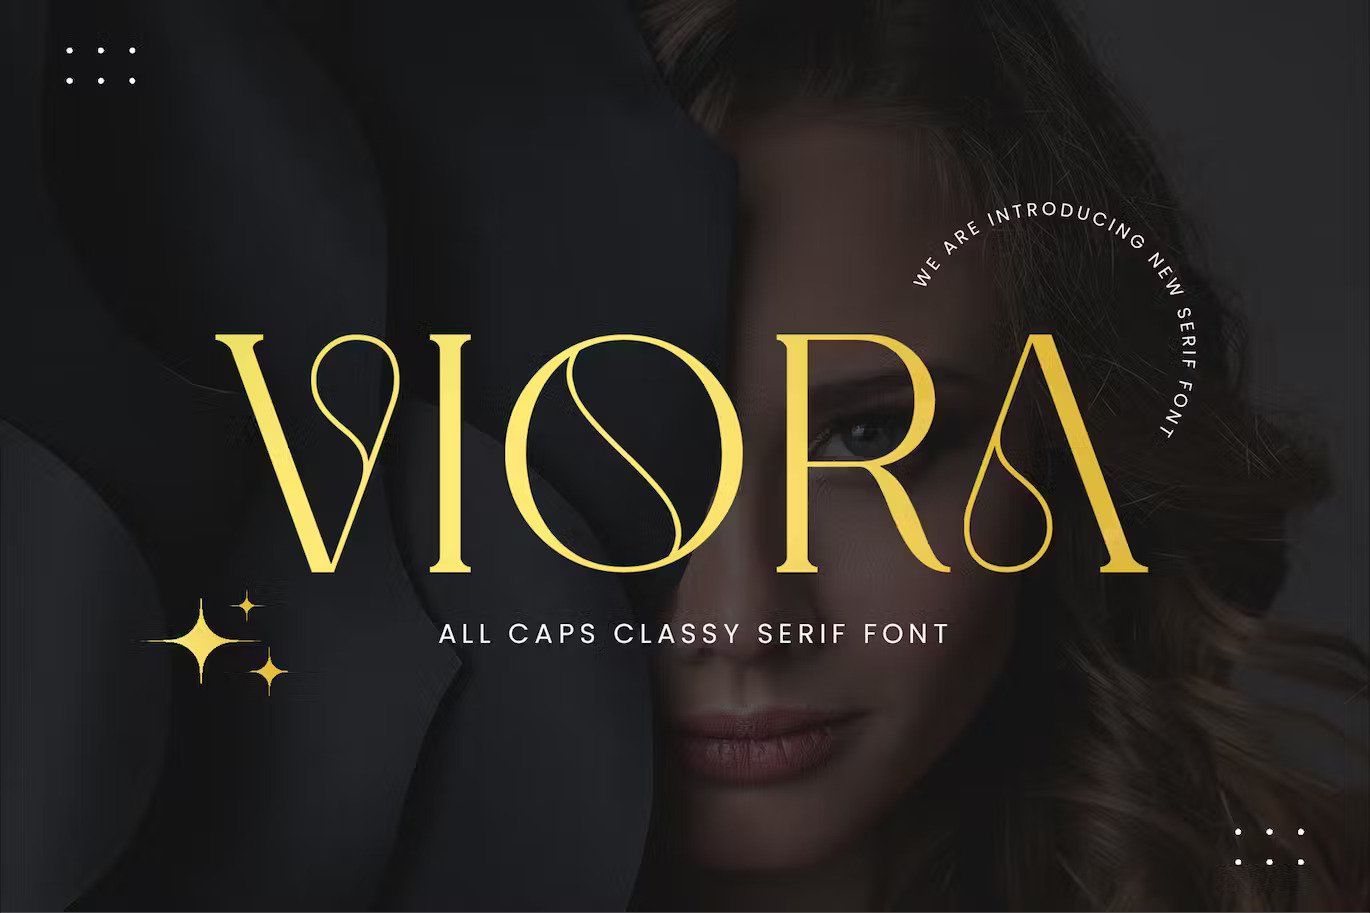 An all caps classy serif font